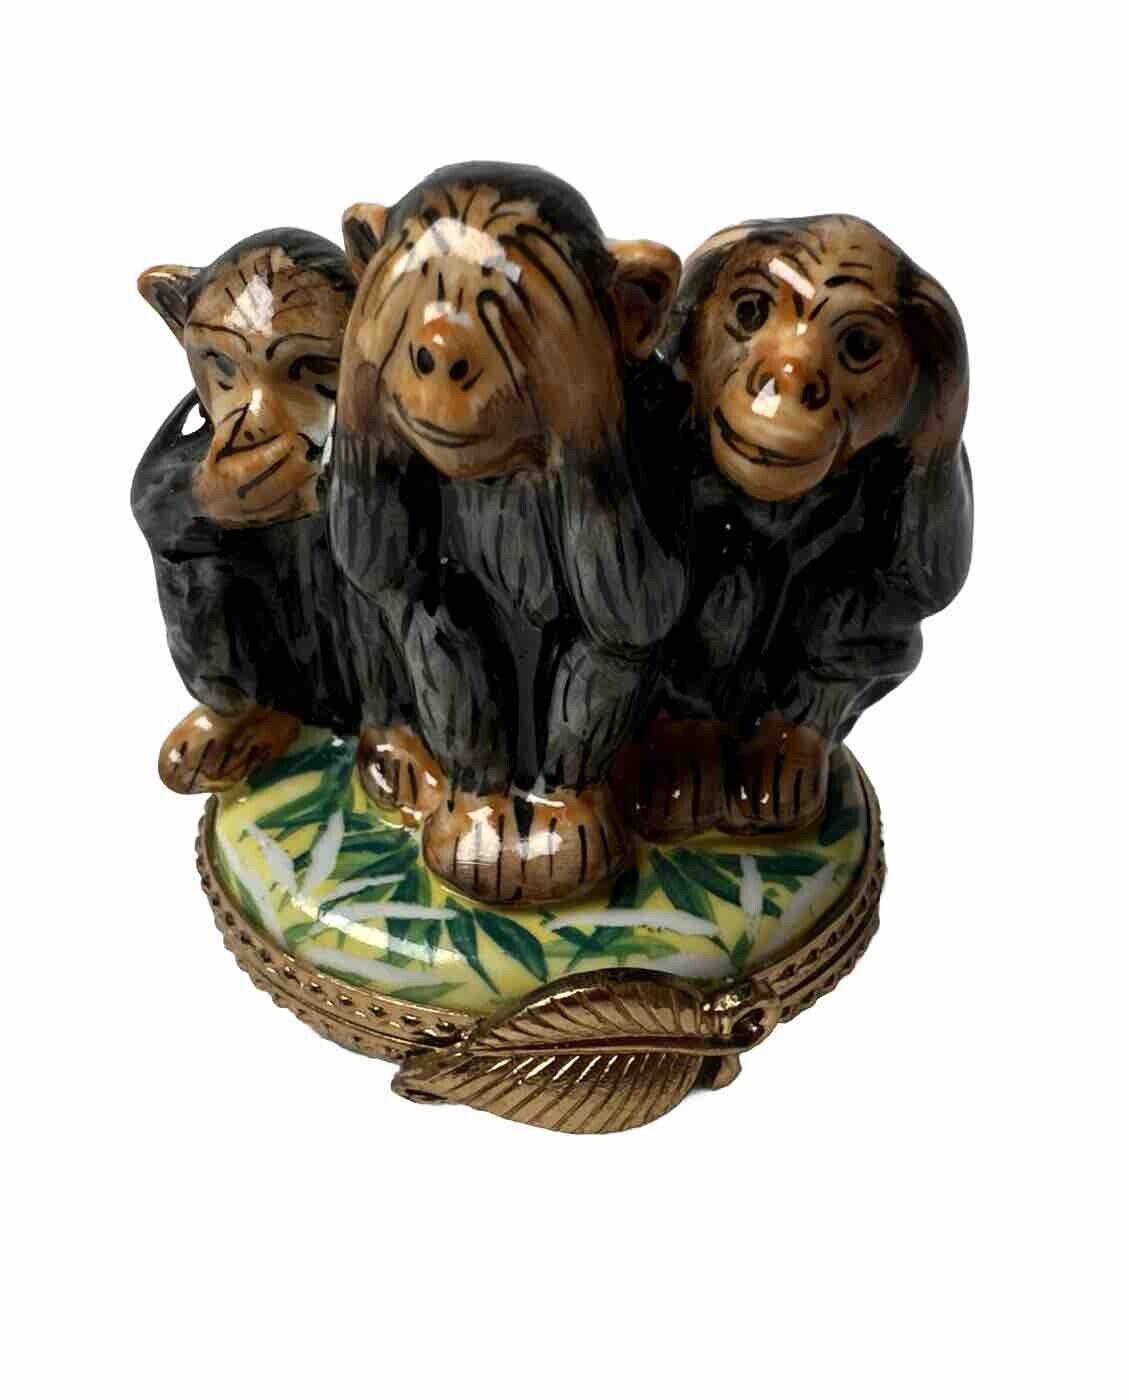 Sinclair Limoges France Peint Main Porcelain Trinket Box Three Monkeys